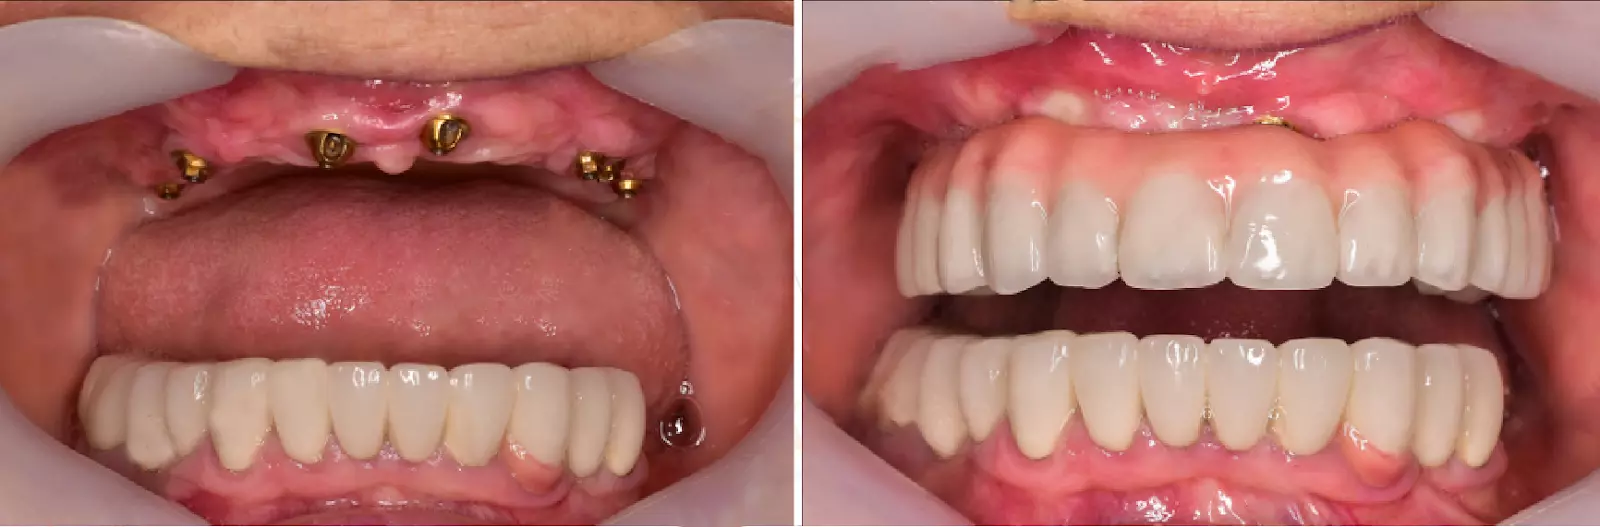 All on 6 dental implants in Turkey